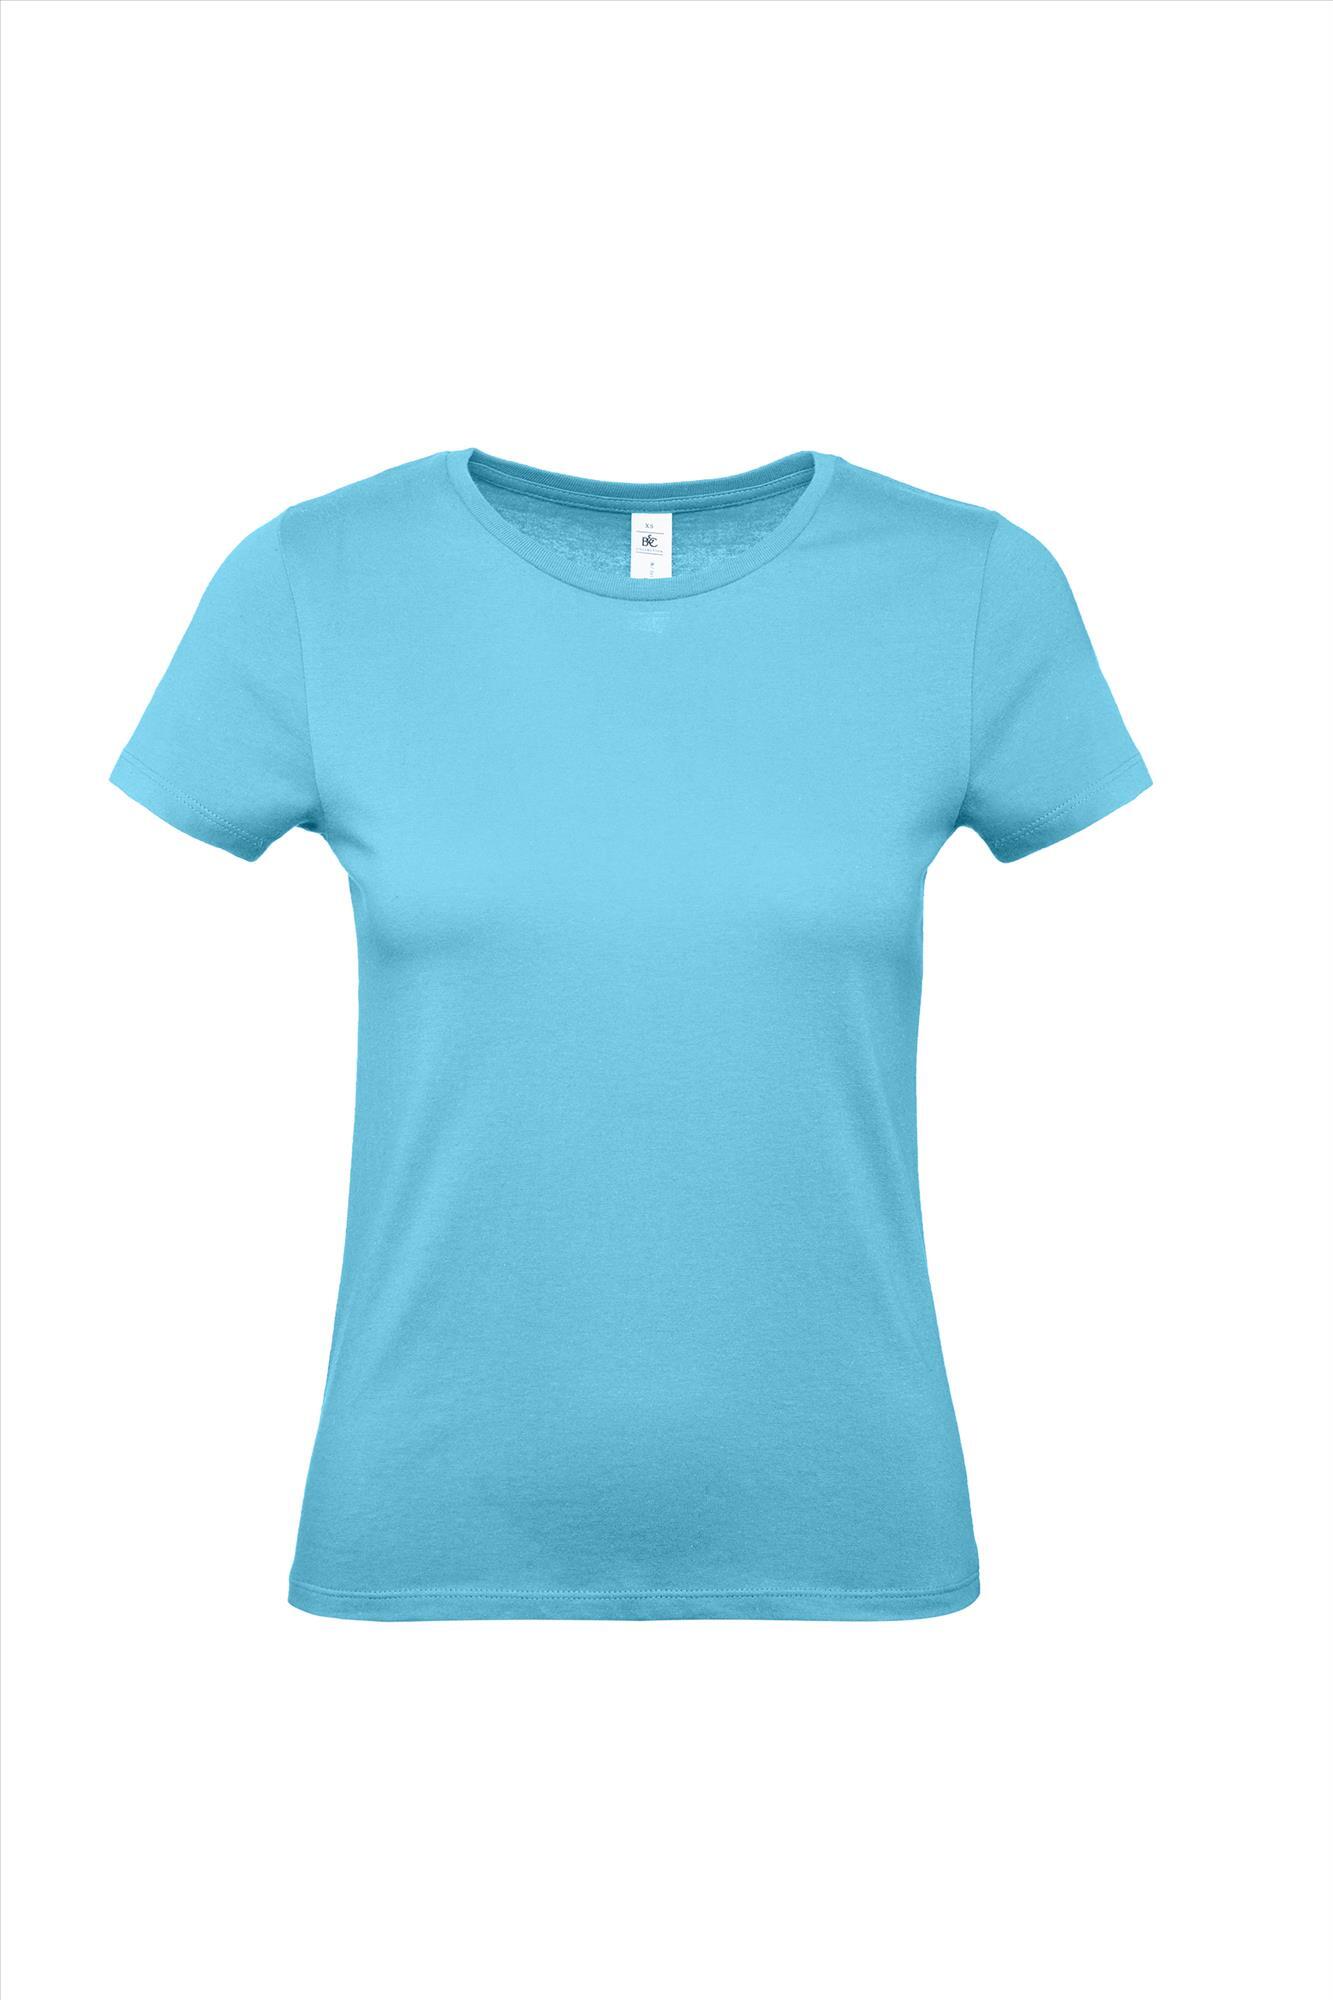 Modern T-shirt voor haar dames shirt turquoise